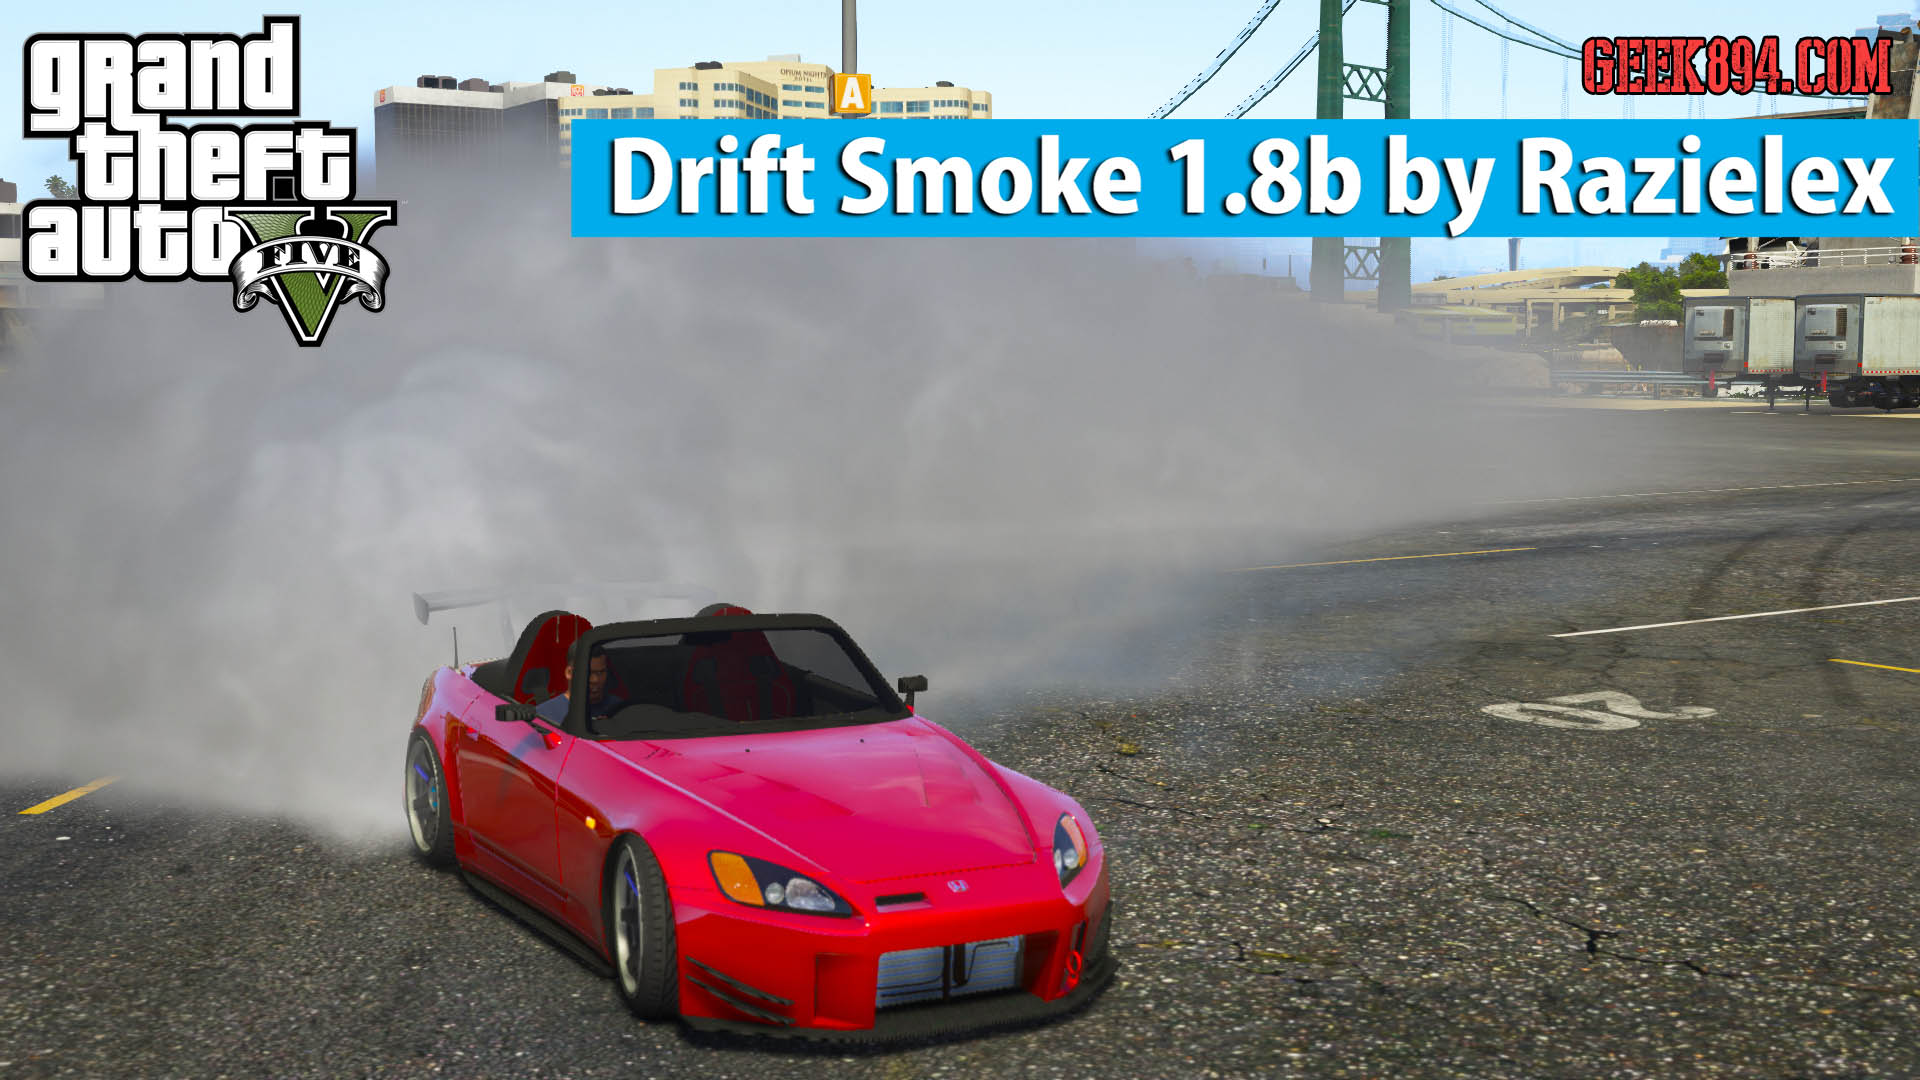 Gta5のタイヤスモークを圧倒的に増大させるmod Drift Smoke1 8b が登場 これは今後に期待したい Geek894 Com